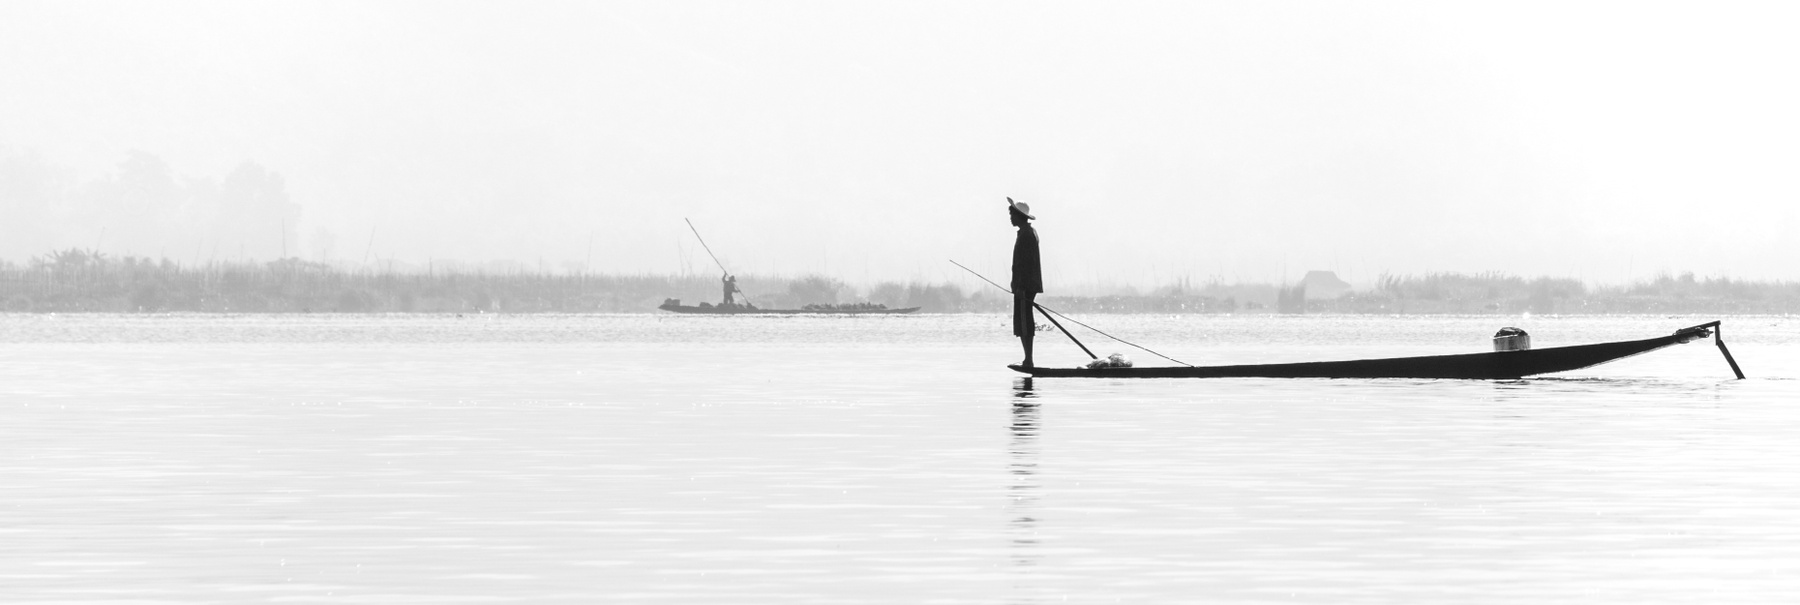 Рыбак бирма мьянма озеро инле рыбак